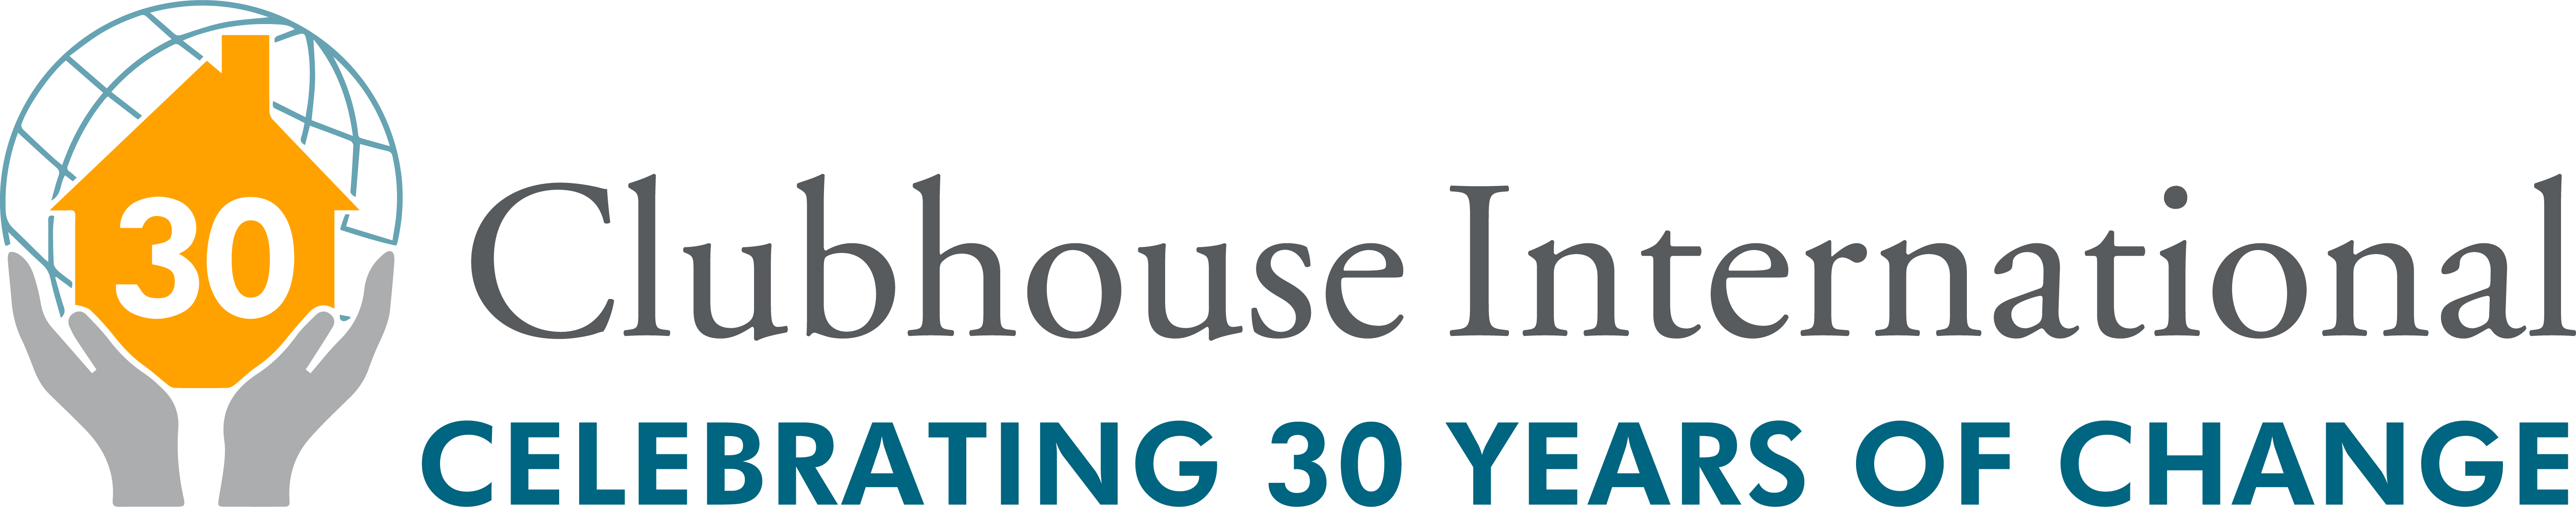 Clubhouse International Celebrates 30 Years of Change